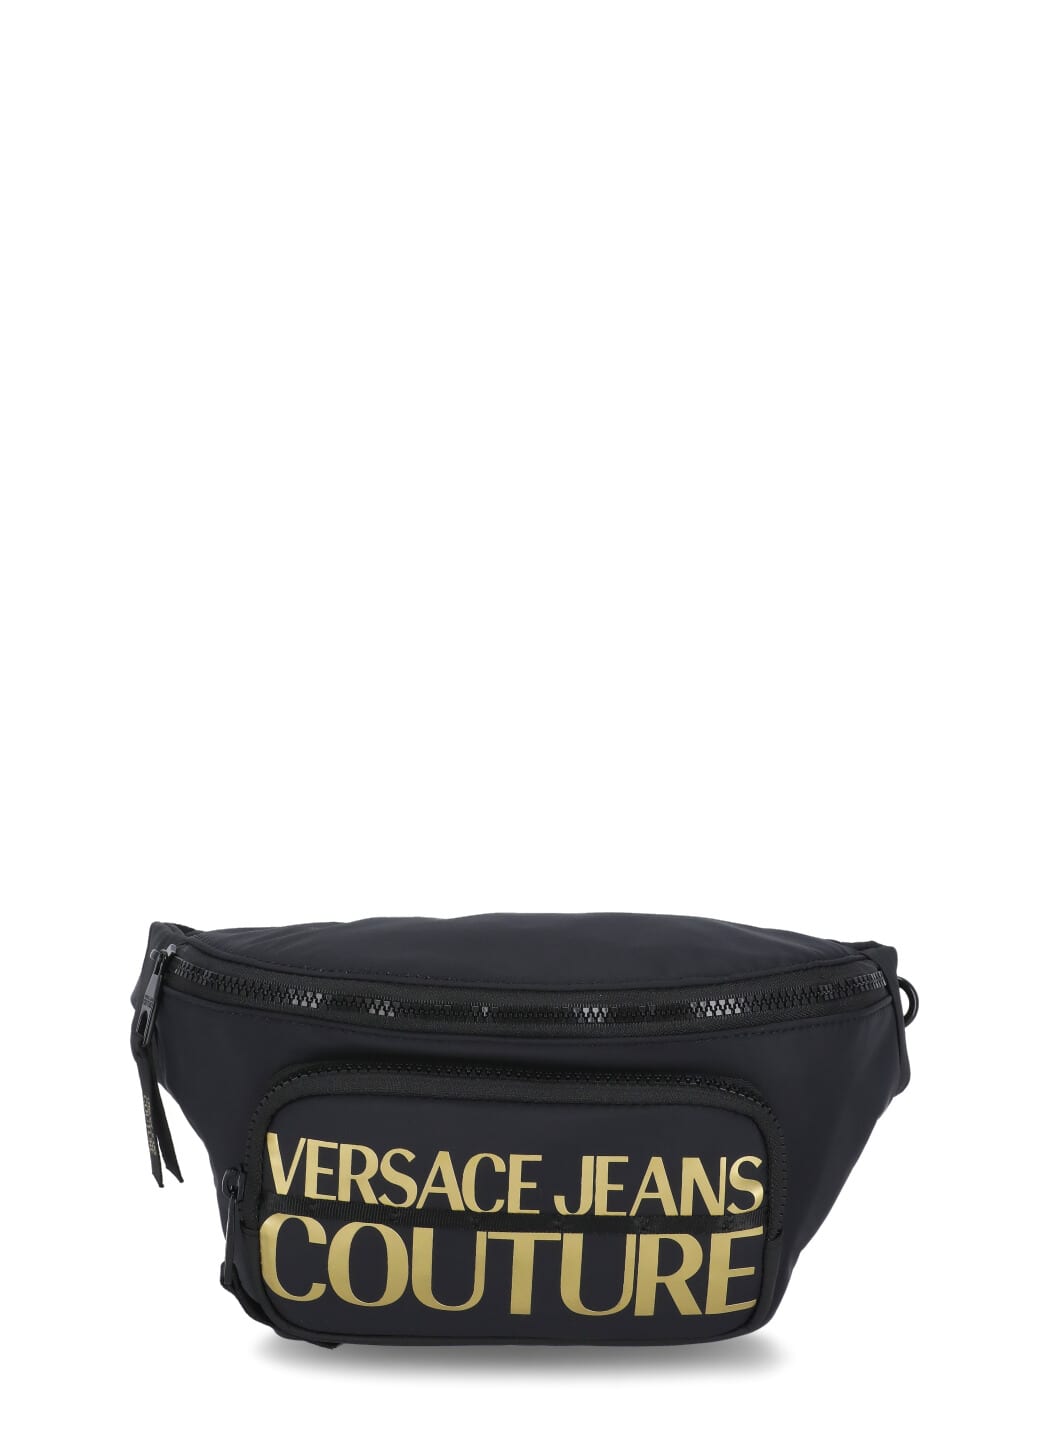 Versace Jeans Couture Range Pouch